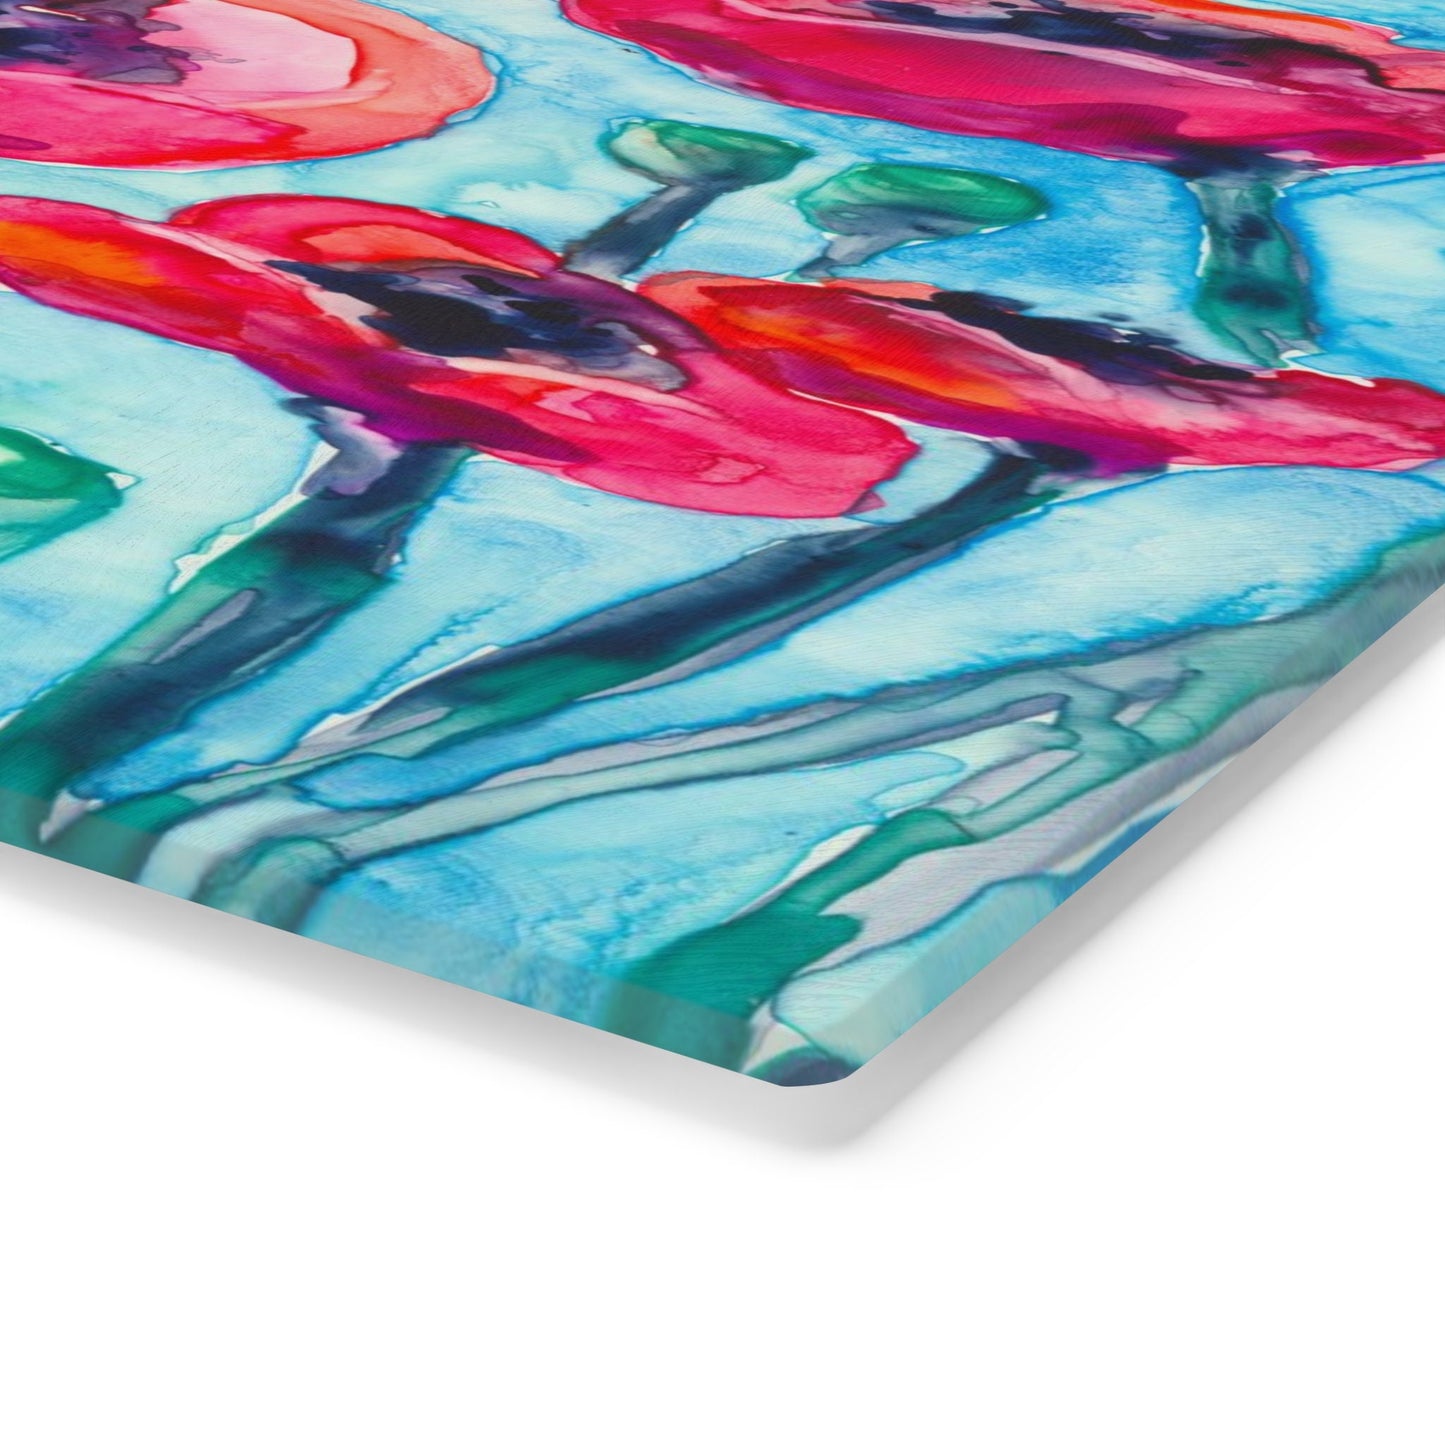 Poppy Sky Glass Cutting Board - Floral Chopping Board - Artistic Kitchen Decor